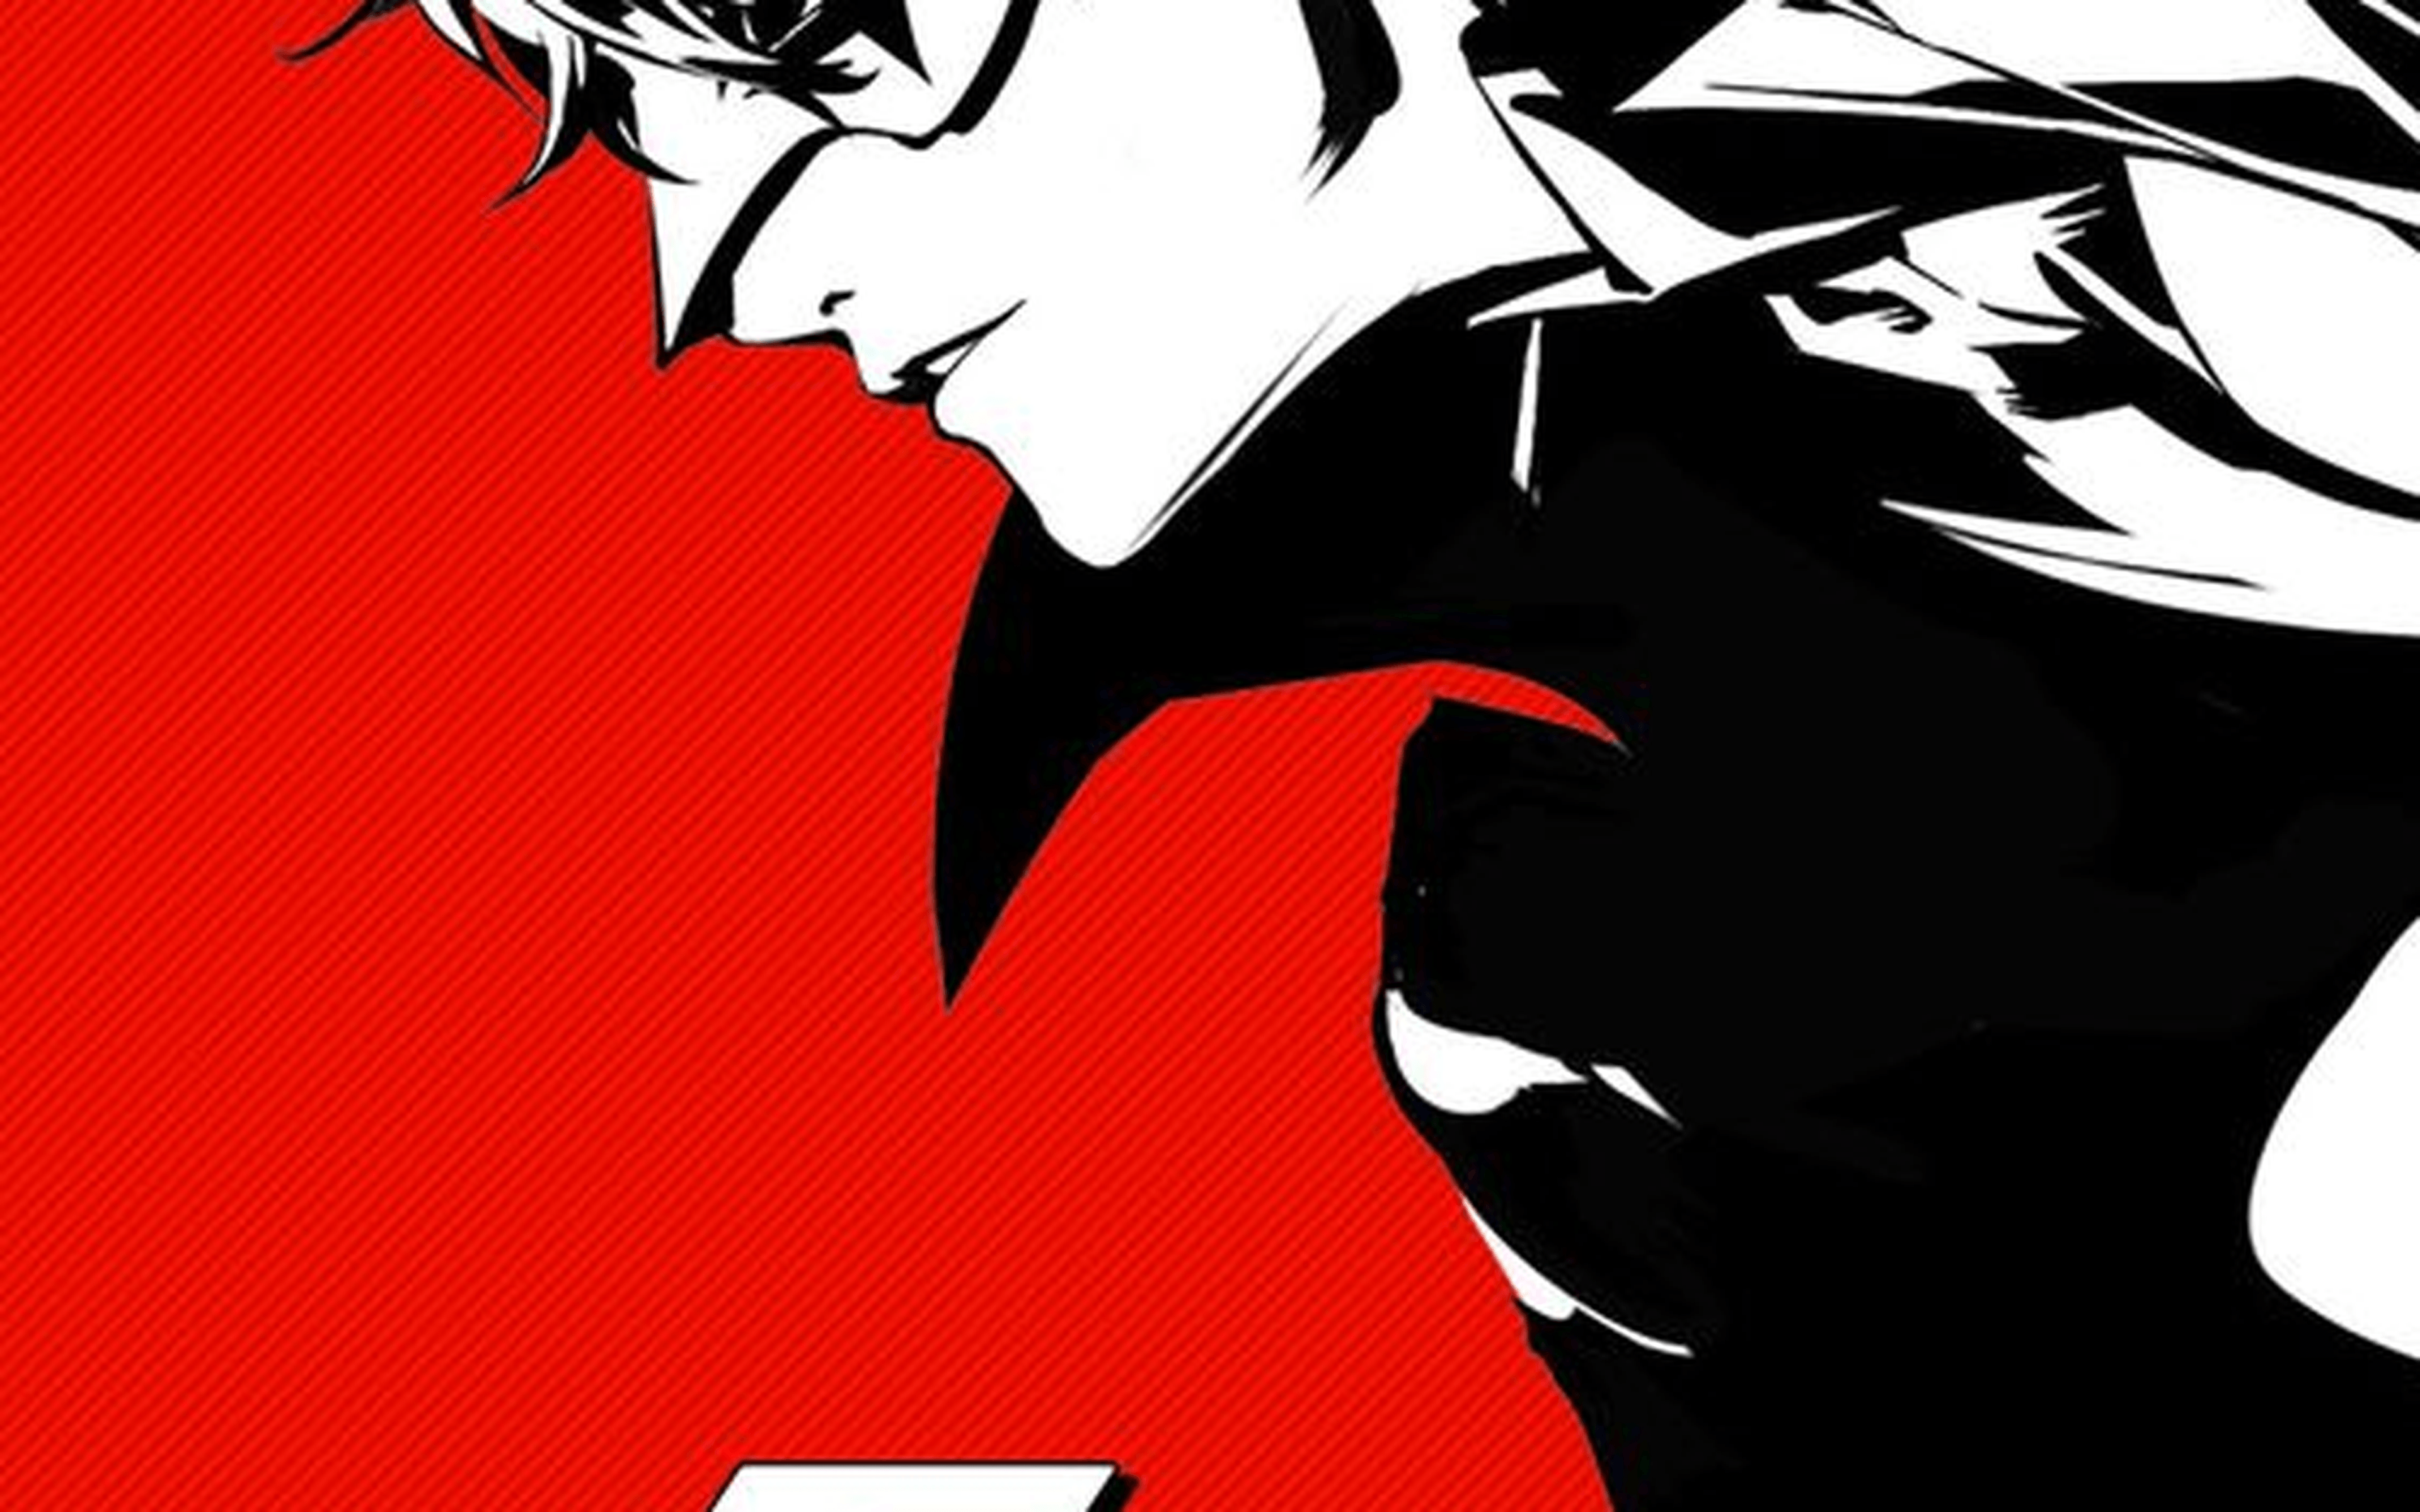 Download wallpapers 4k Joker darkness protagonist Persona 5 manga red  eyes Ren Amamiya Persona 5 characters Joker Persona 5 for desktop free  Pictures for desktop free